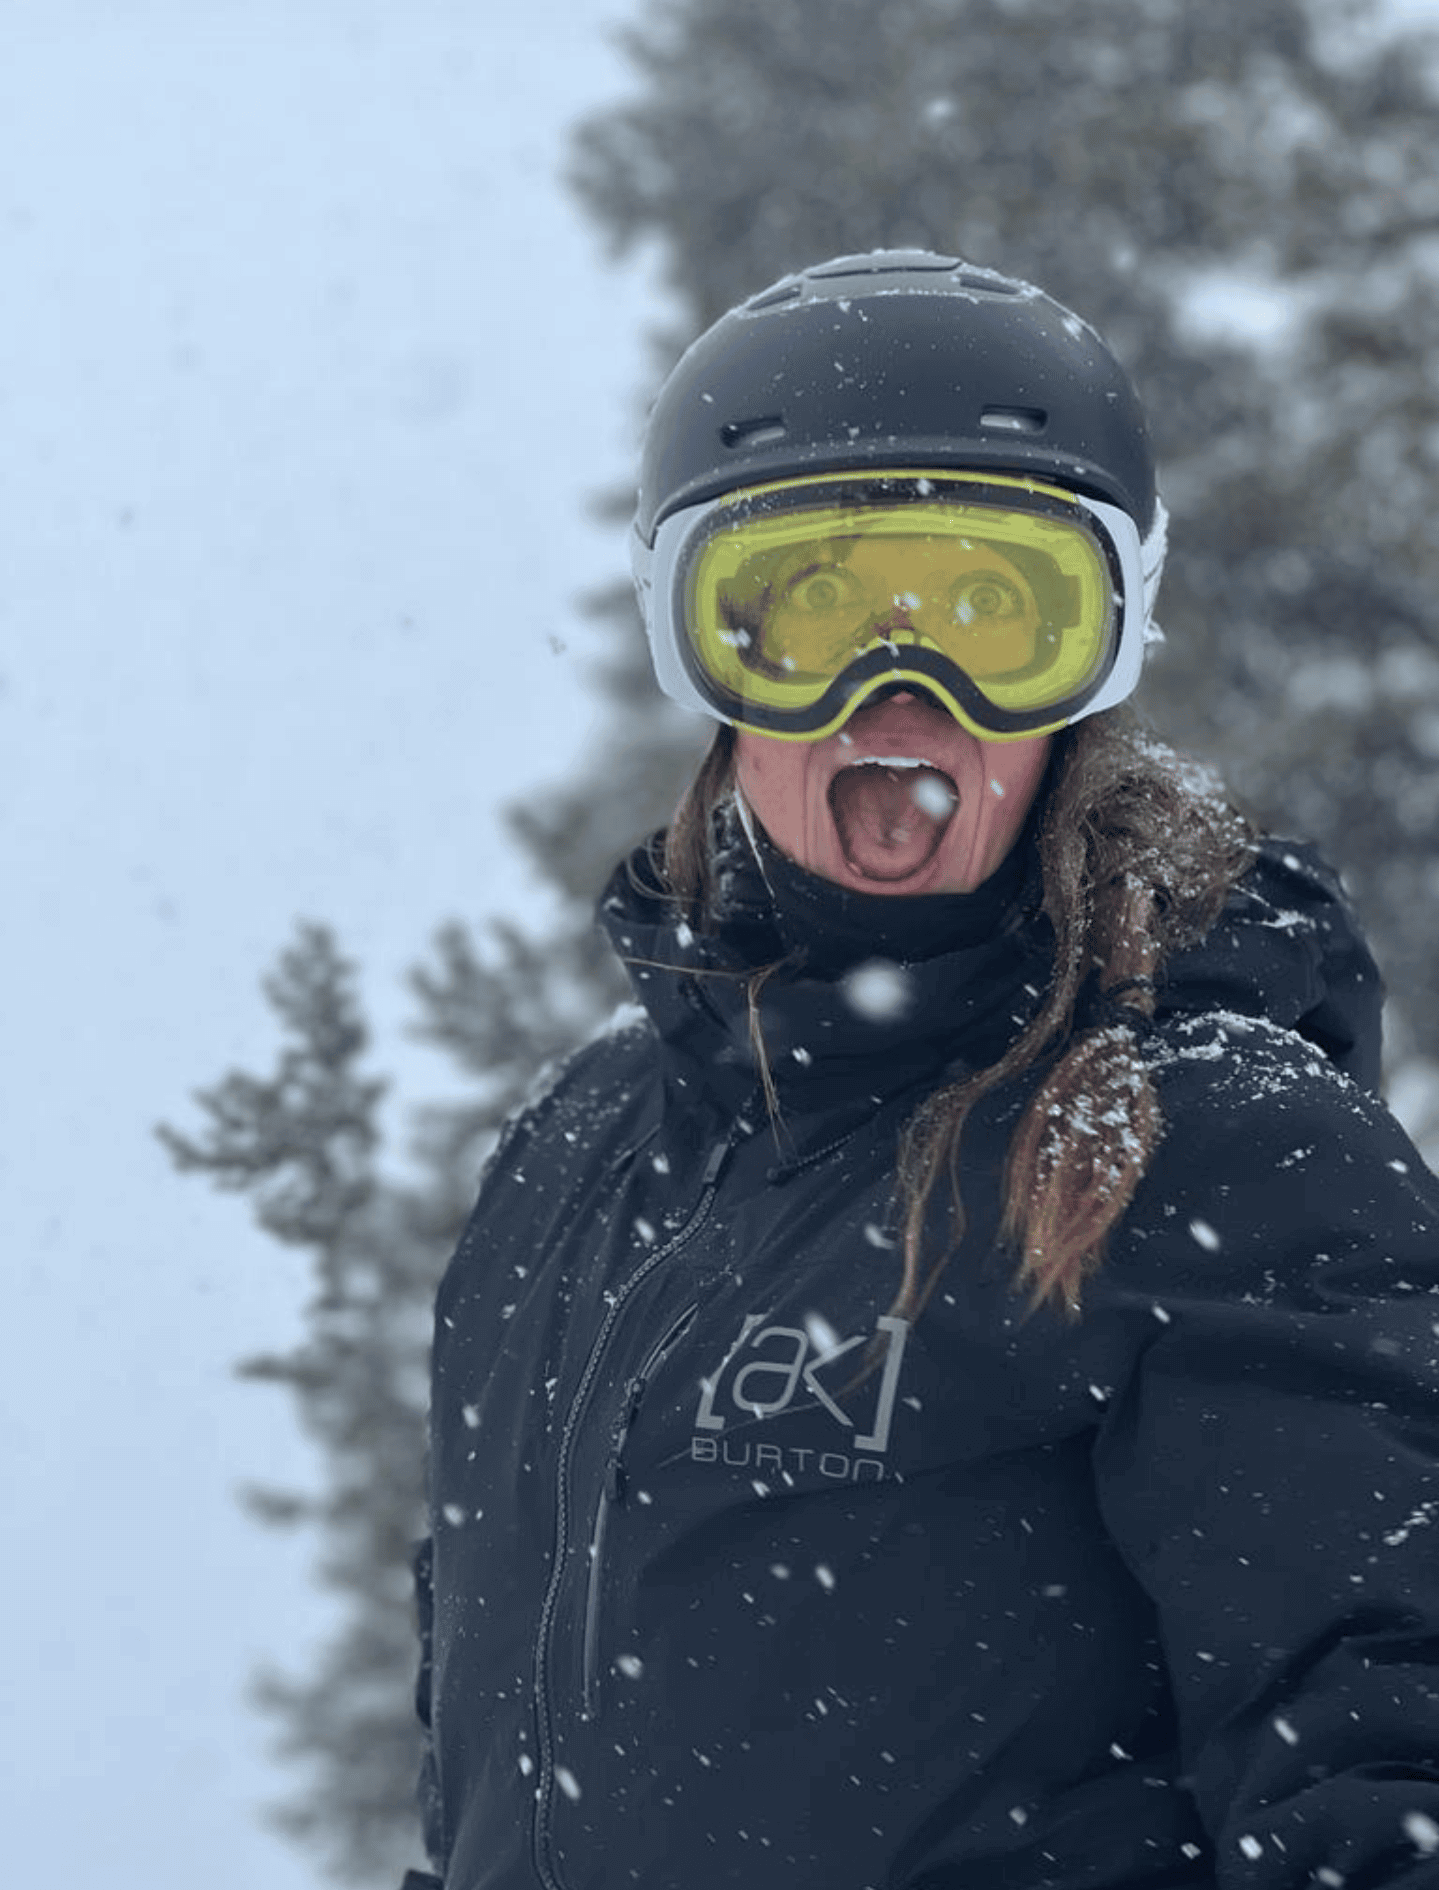 Elizabeth Niotis making a silly face in her snowboarding gear.